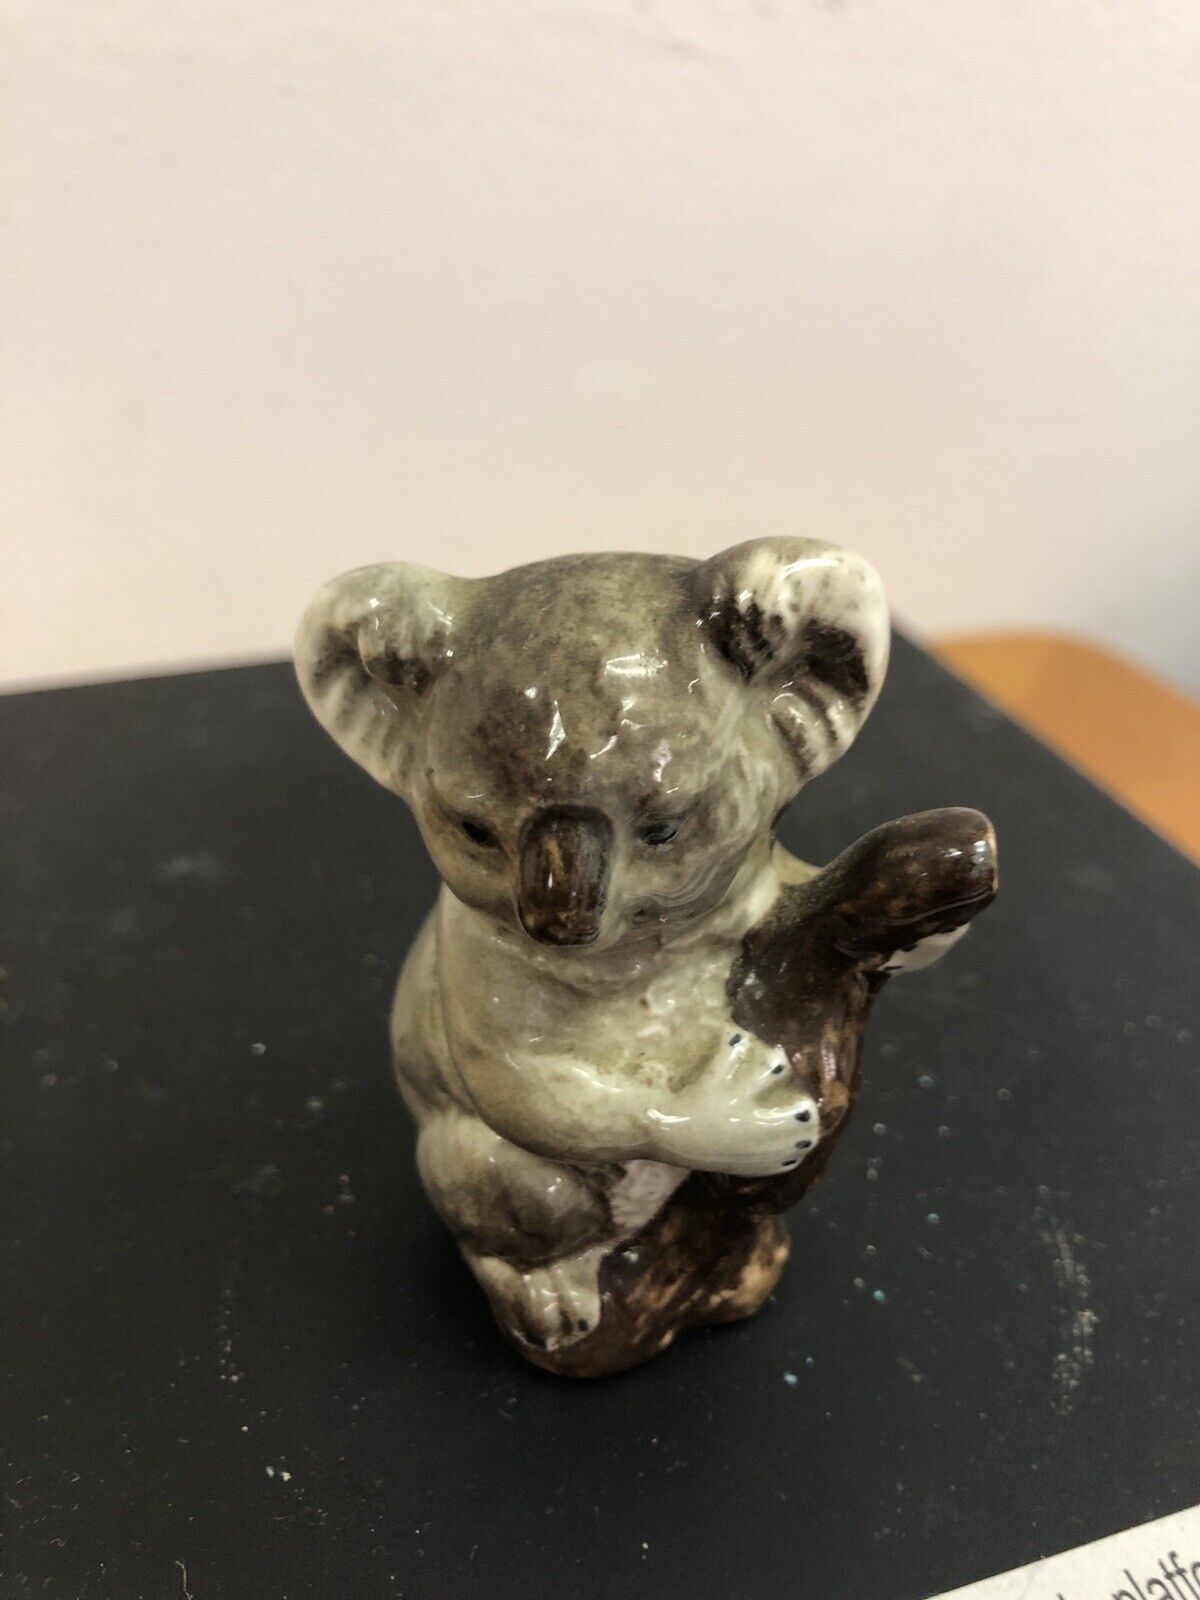 Vintage Small Ceramic Koala Bear Figurine Collectible Made In England